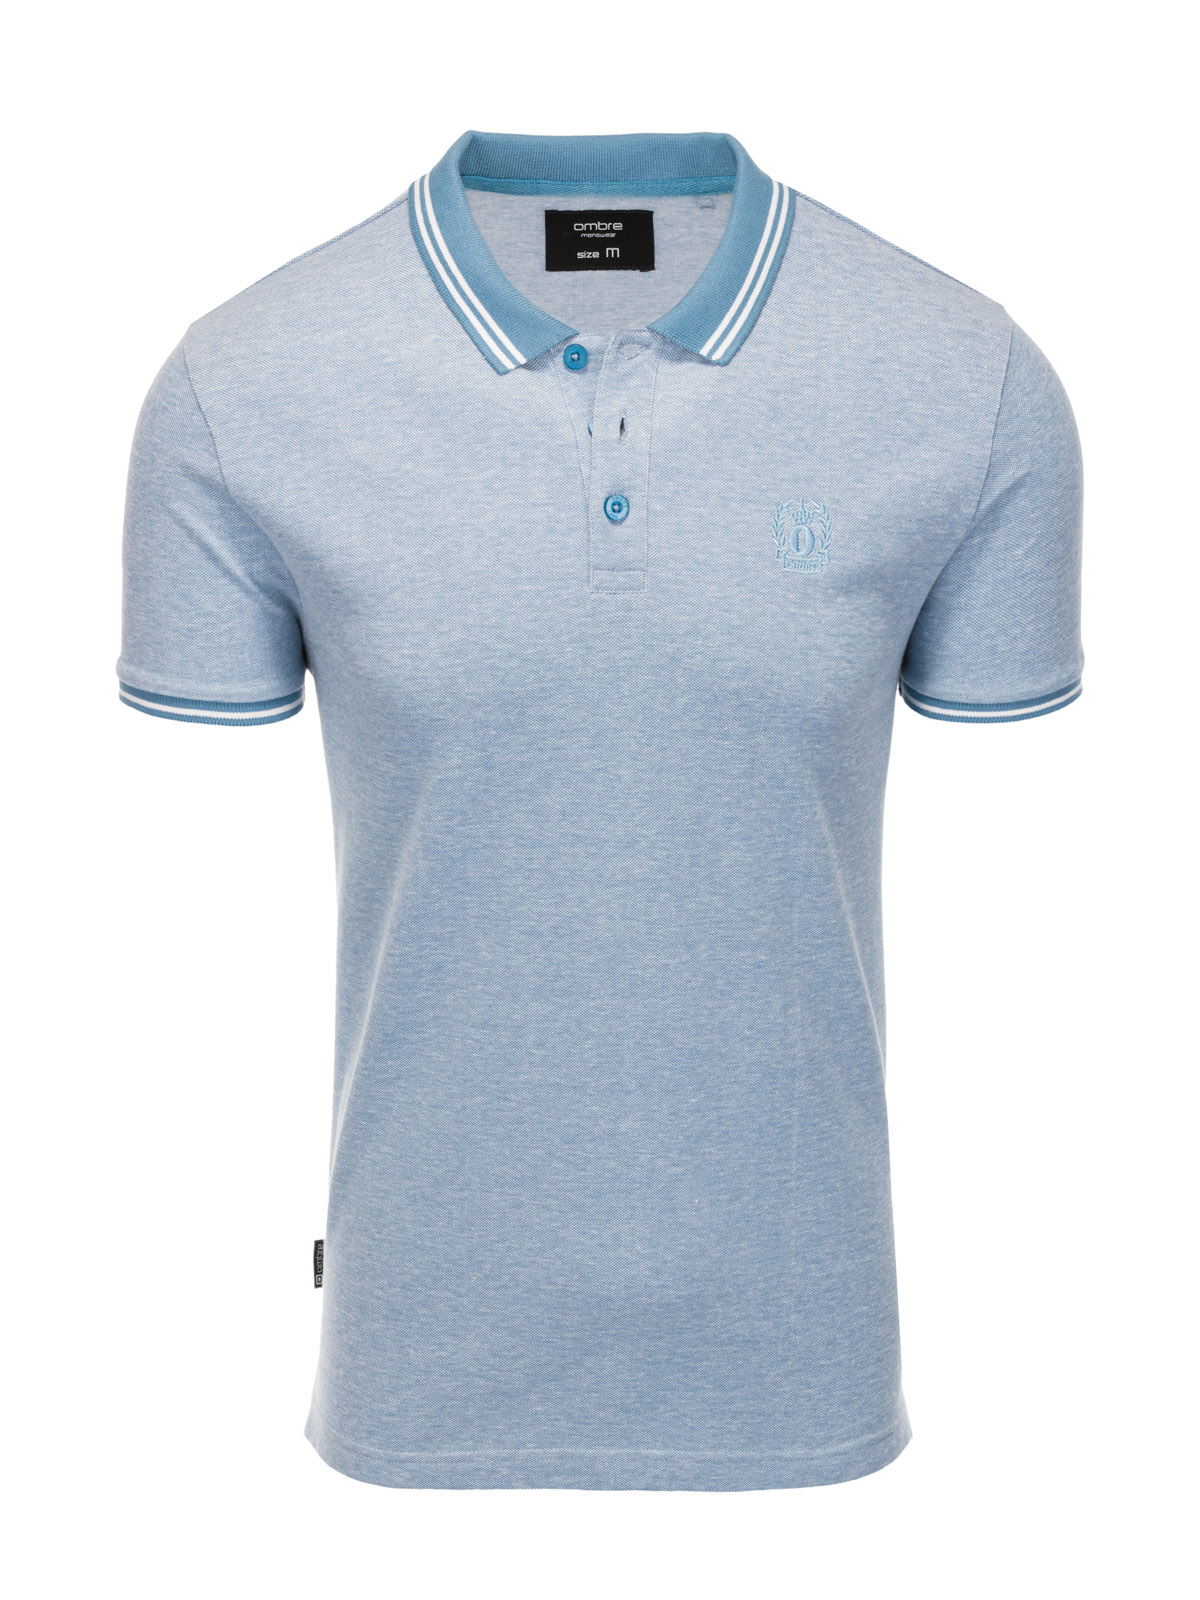 Men\'s melange polo shirt with contrast collar - blue V3 S1618 | Ombre.com -  Men\'s clothing online